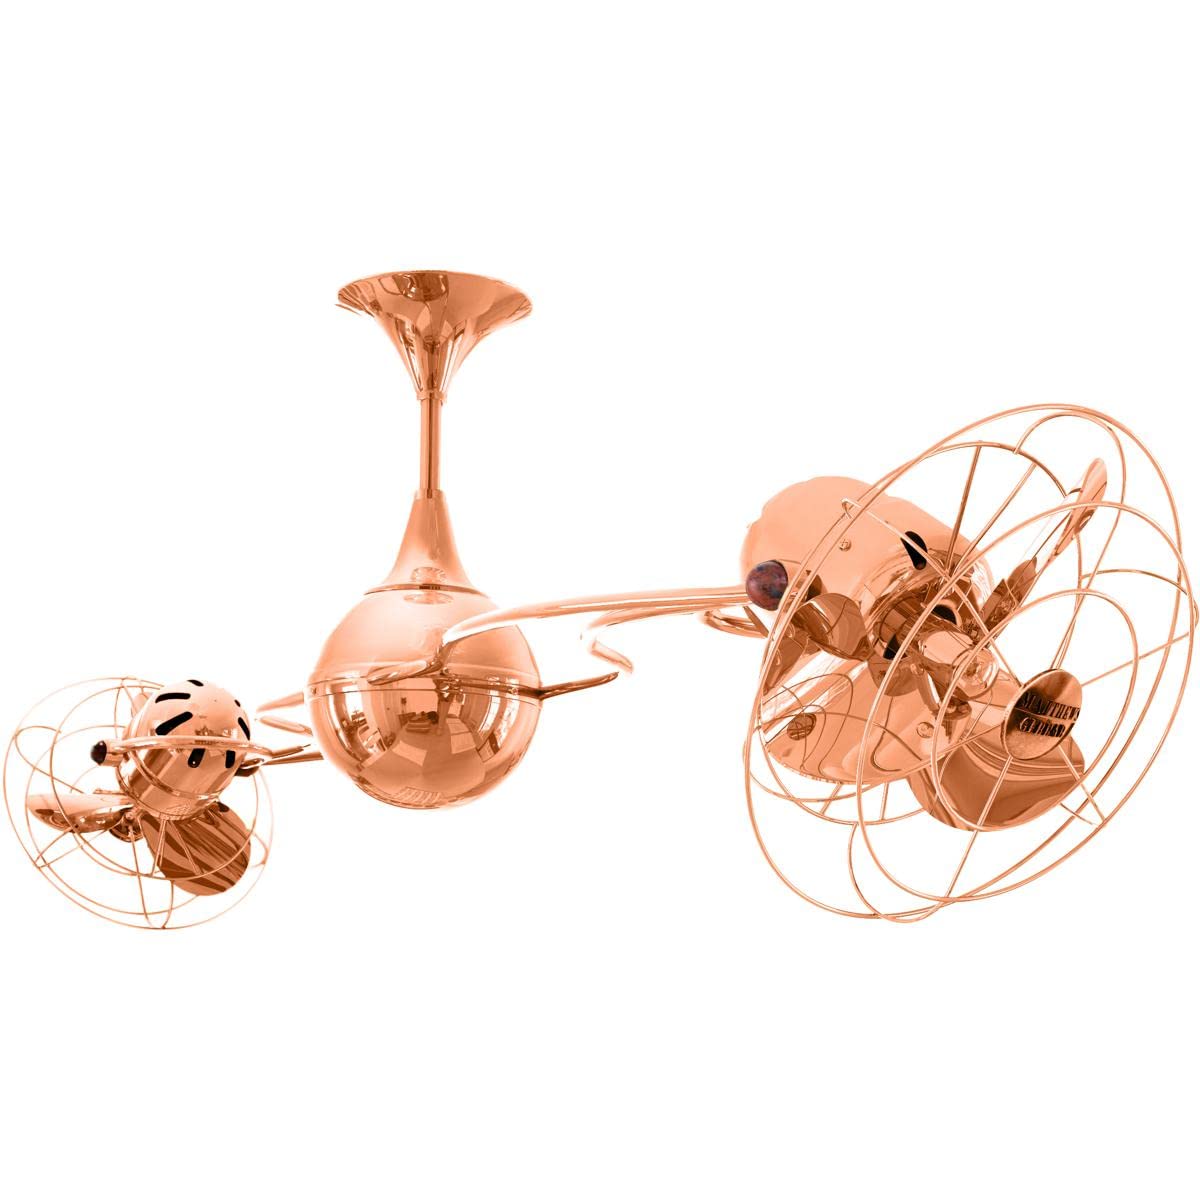 Matthews Fan IV-CP-MTL Italo Ventania 360° dual headed rotational ceiling fan in polished copper finish with metal blades.